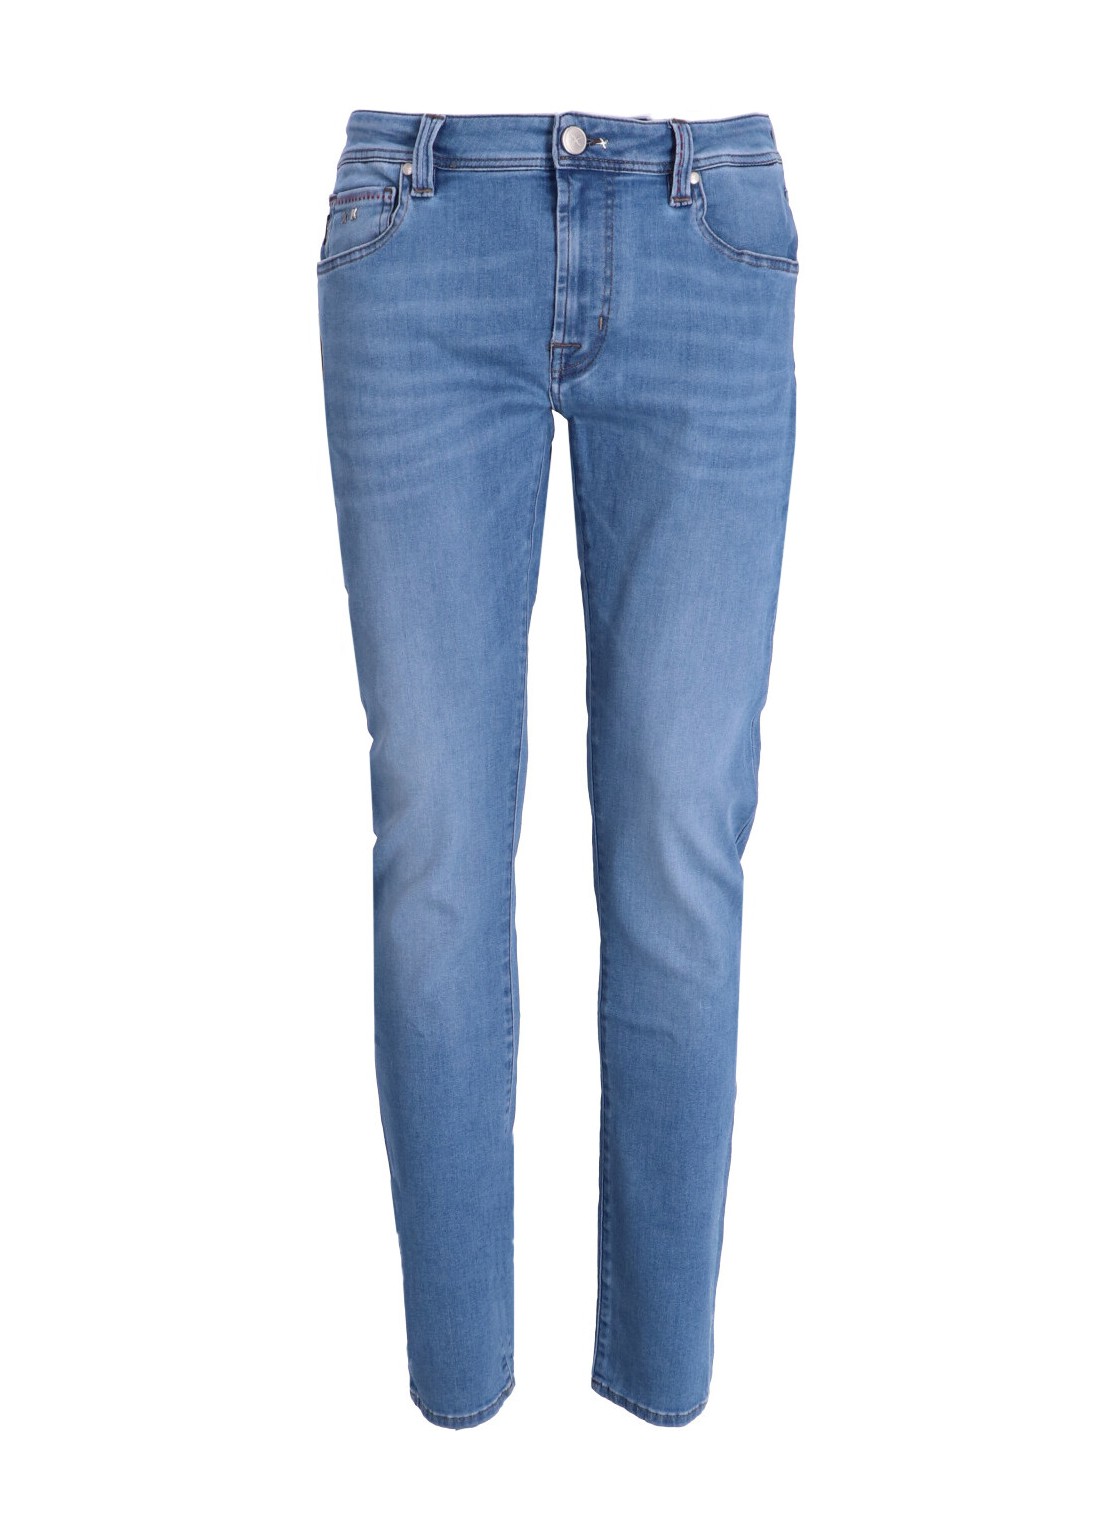 Pantalon jeans tramarossa denim man leonardo zip stre leonardo zip stre 12 month heri talla 35
 